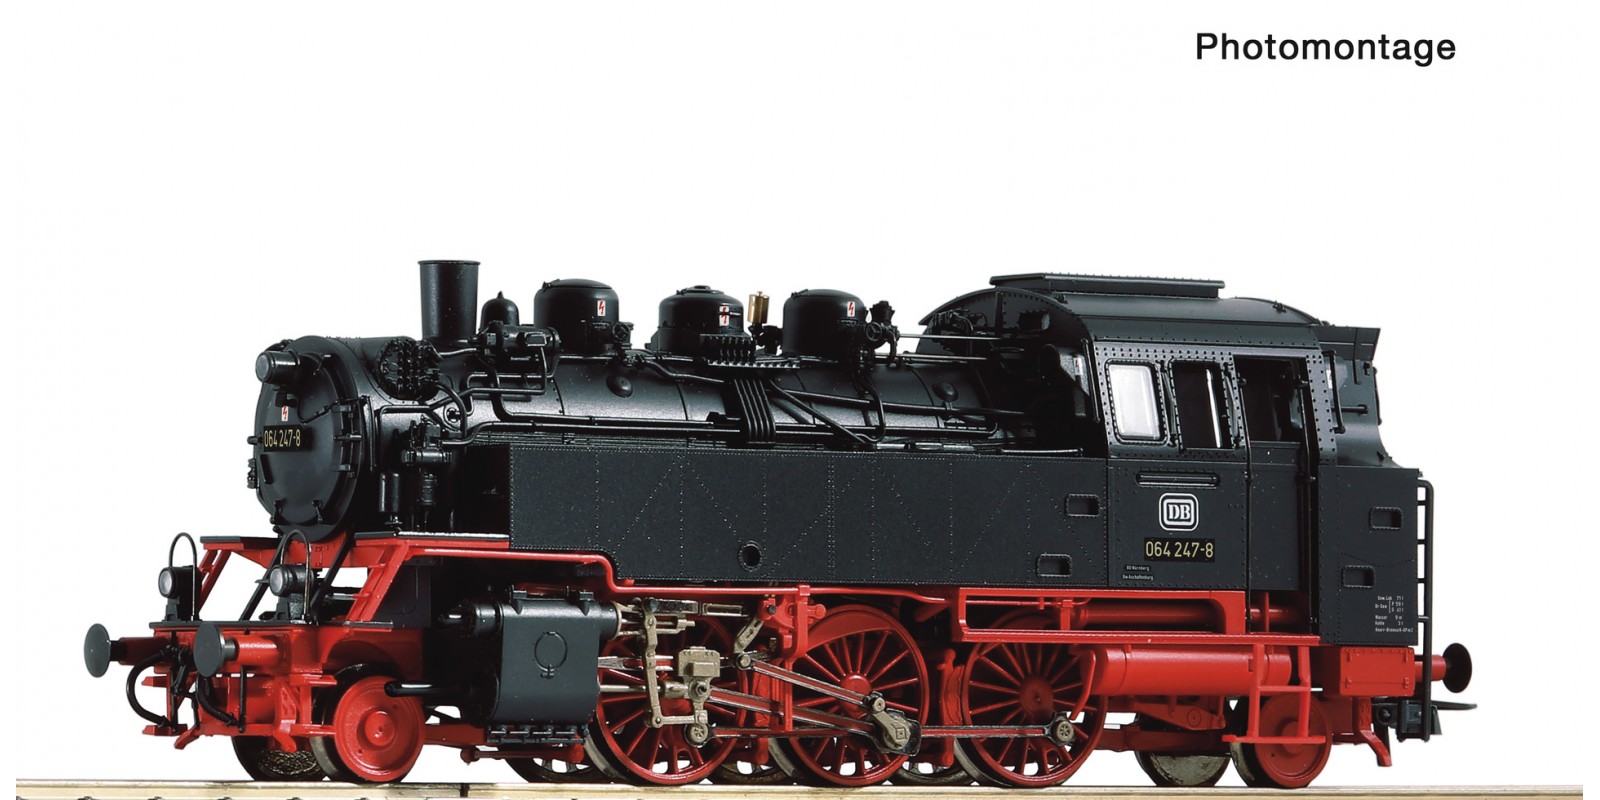 RO78218 Steam locomotive 064 247-0, DB